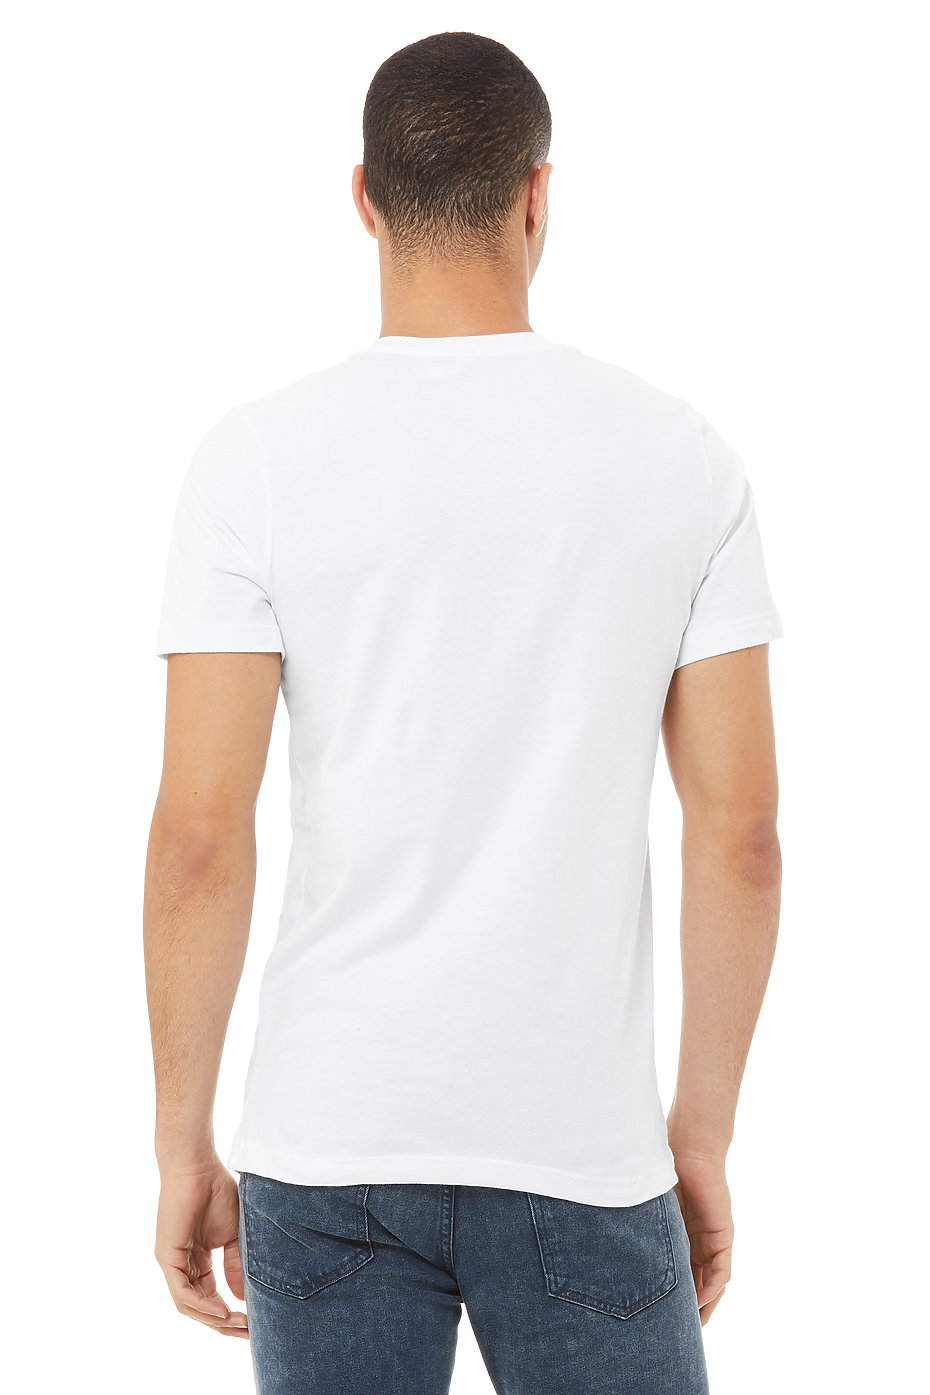 Mens Pocket Tees | Wholesale Jersey T Shirts | Bulk, Plain Blank T ...